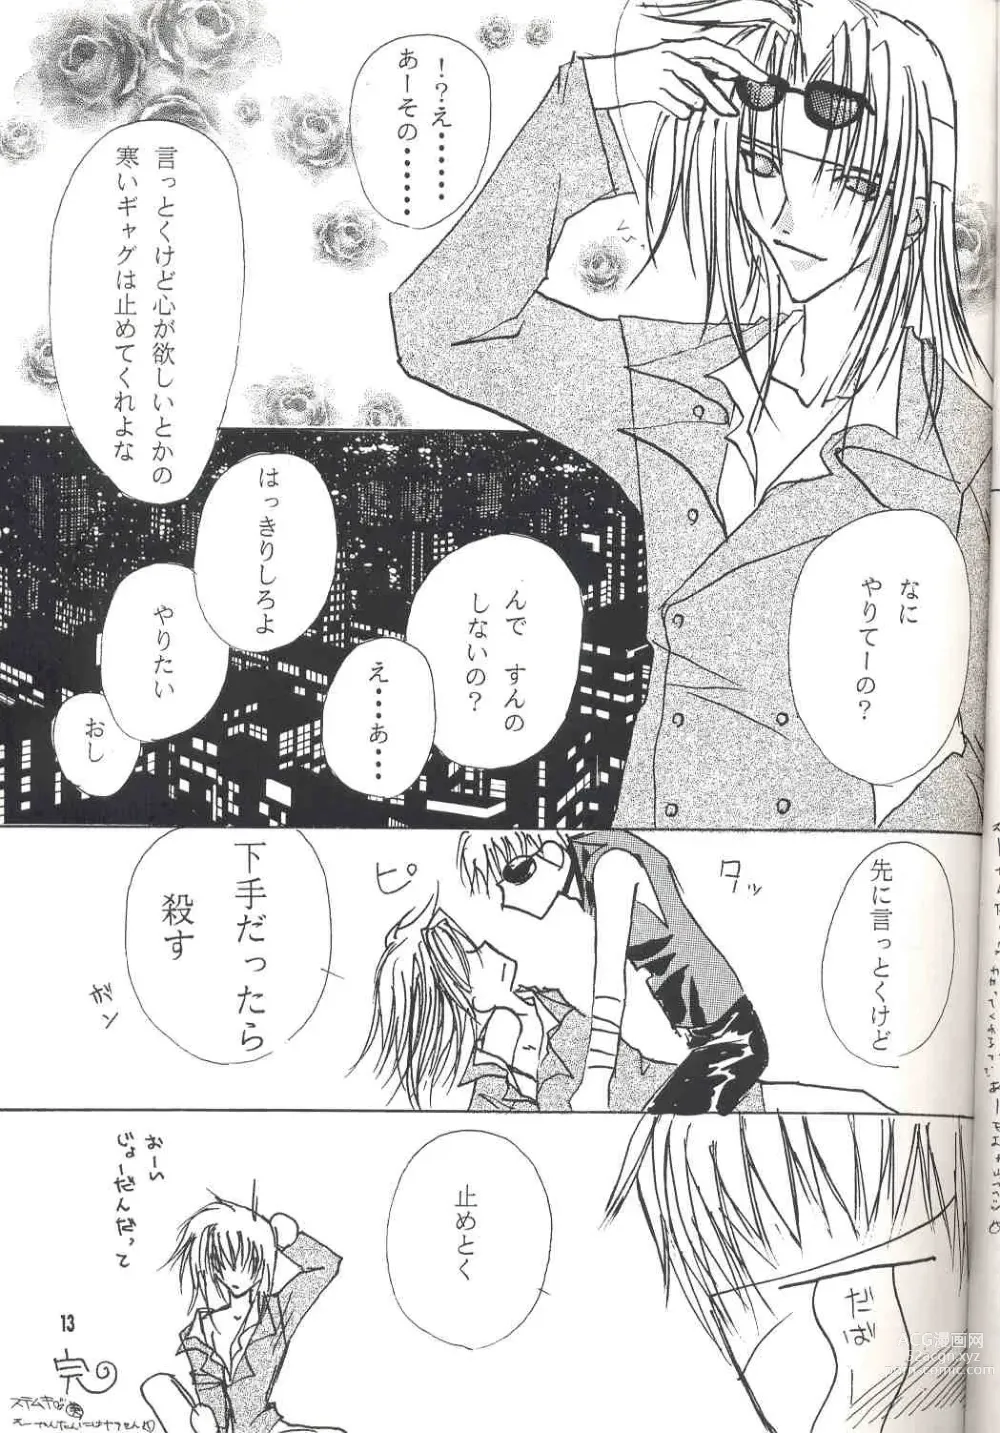 Page 12 of doujinshi Sentimental